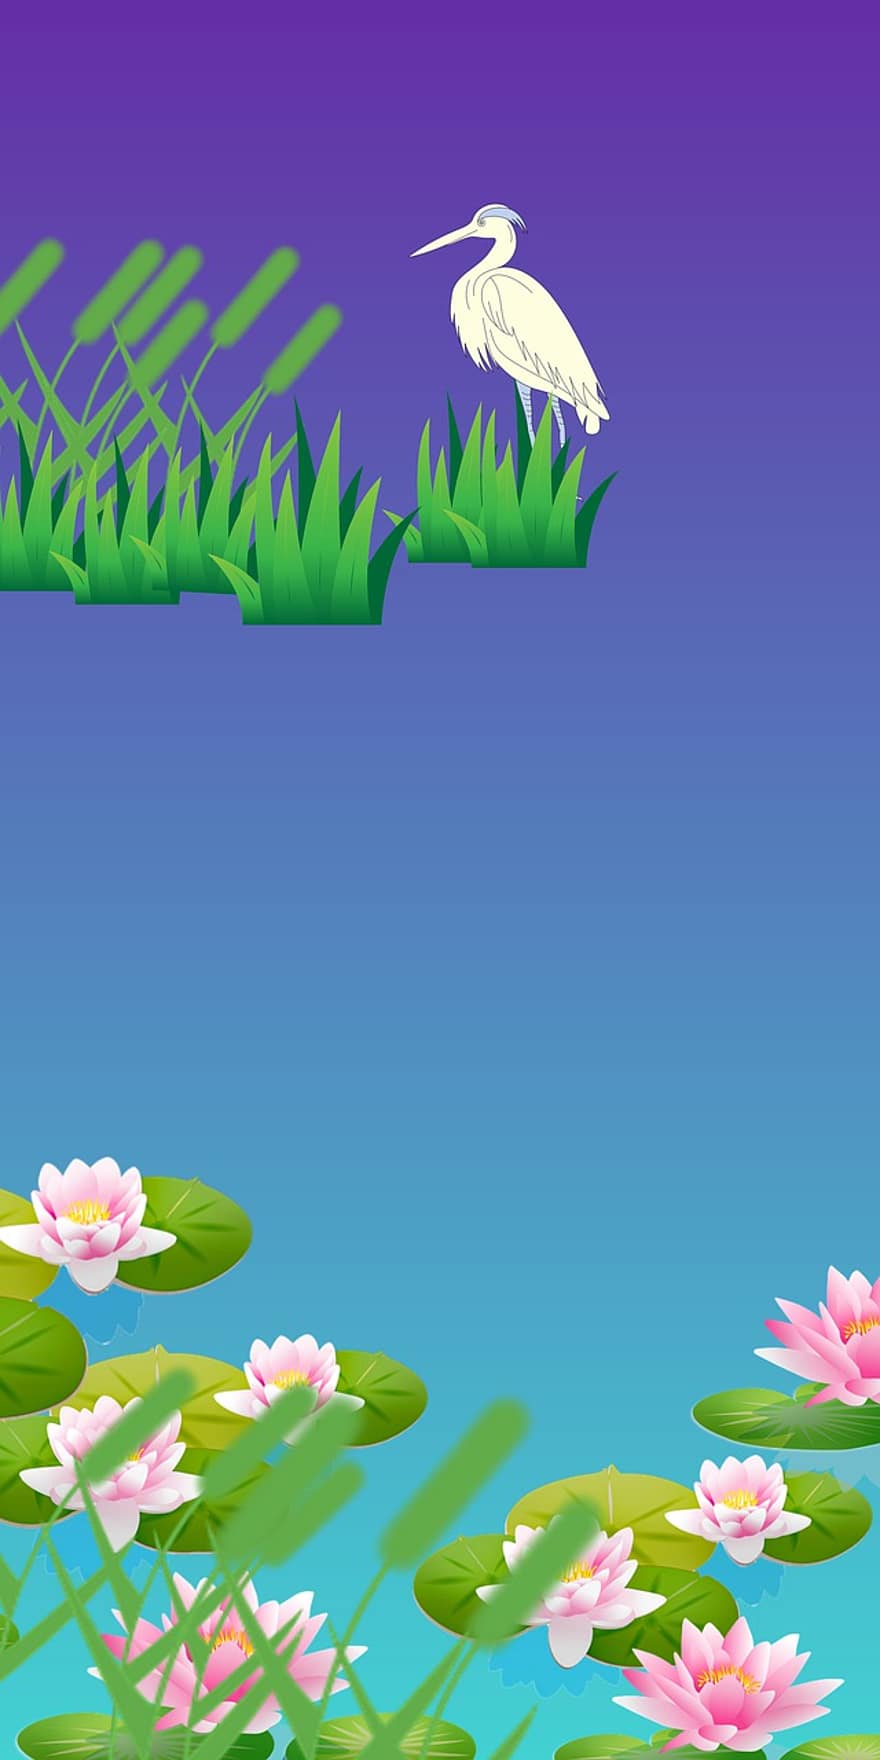 Pond, Lotus, Water Lilies, Digital Art, grass, vector, illustration, backgrounds, summer, plant, flower